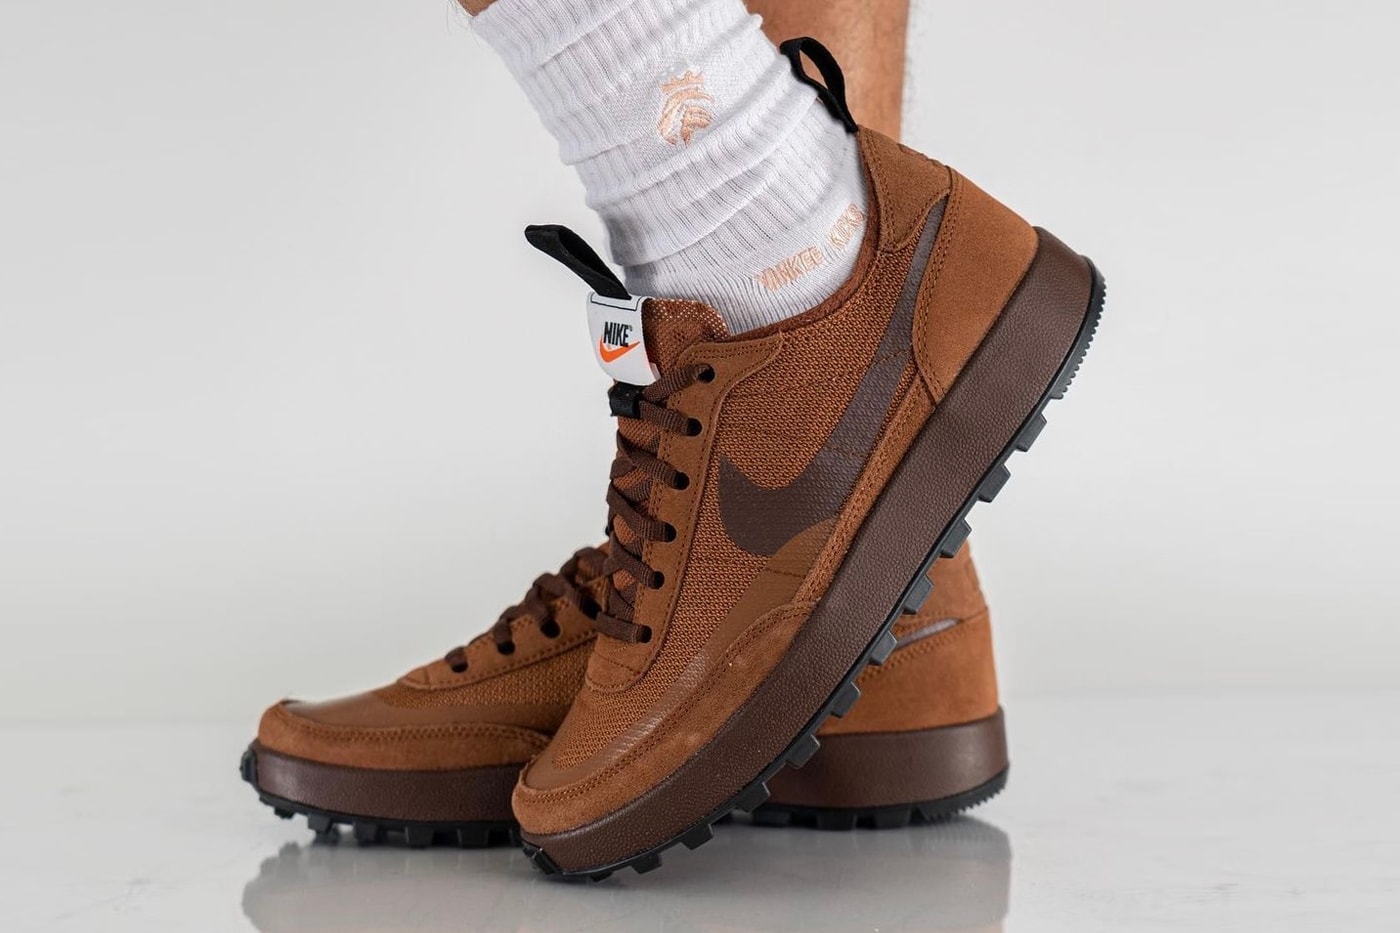 Tom Sachs NikeCraft General Purpose Shoe Brown On-Foot Look Release Info DA6672-201 Date Buy Price 